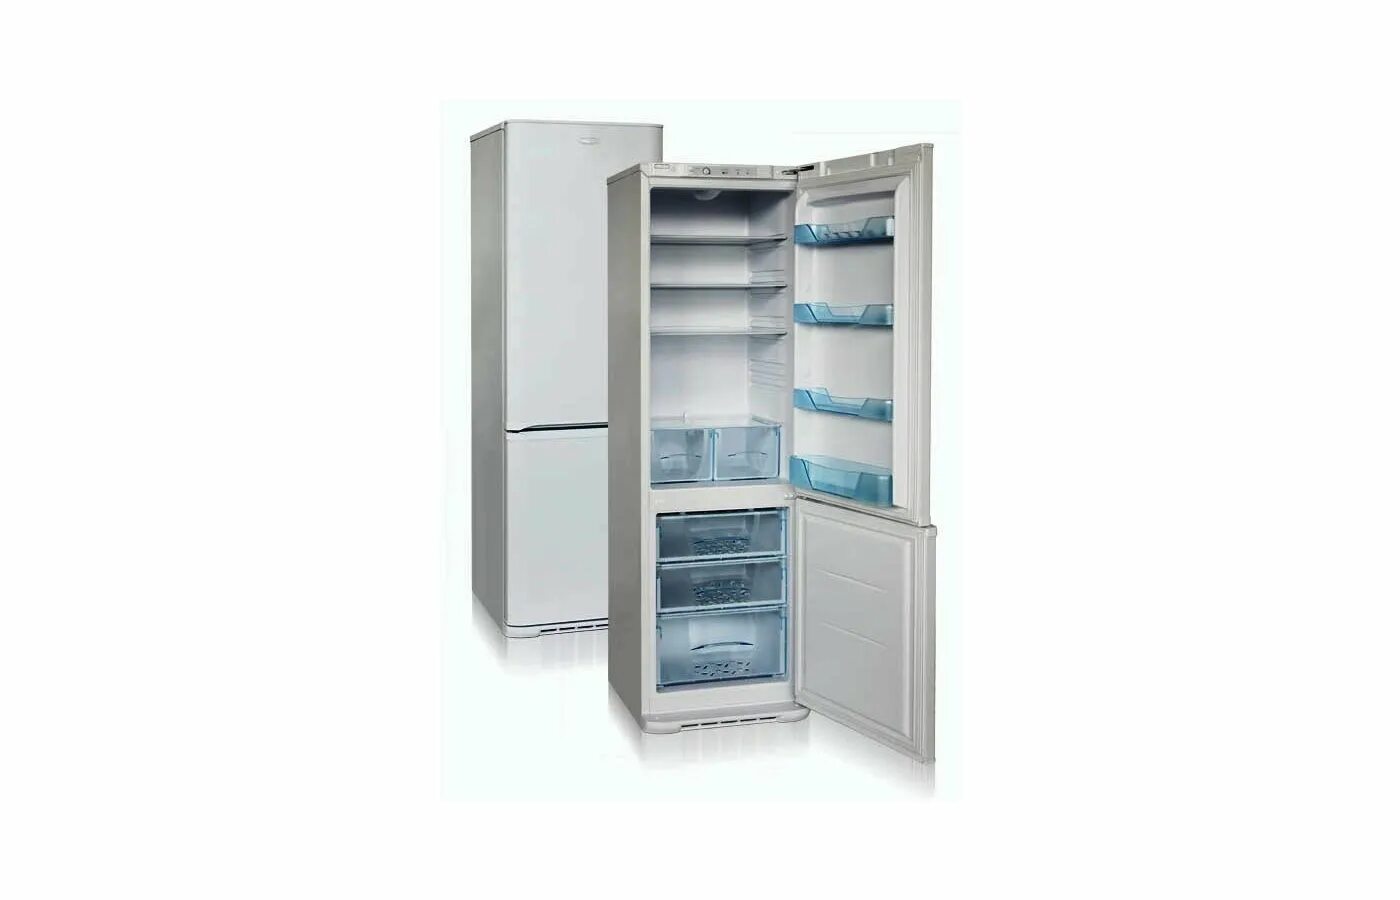 Атлант бирюса. Двухкамерный холодильник Бирюса 132. Бирюса м127 холодильник. Холодильник Бирюса двухкамерный модели 132. Холодильник Бирюса 6032.